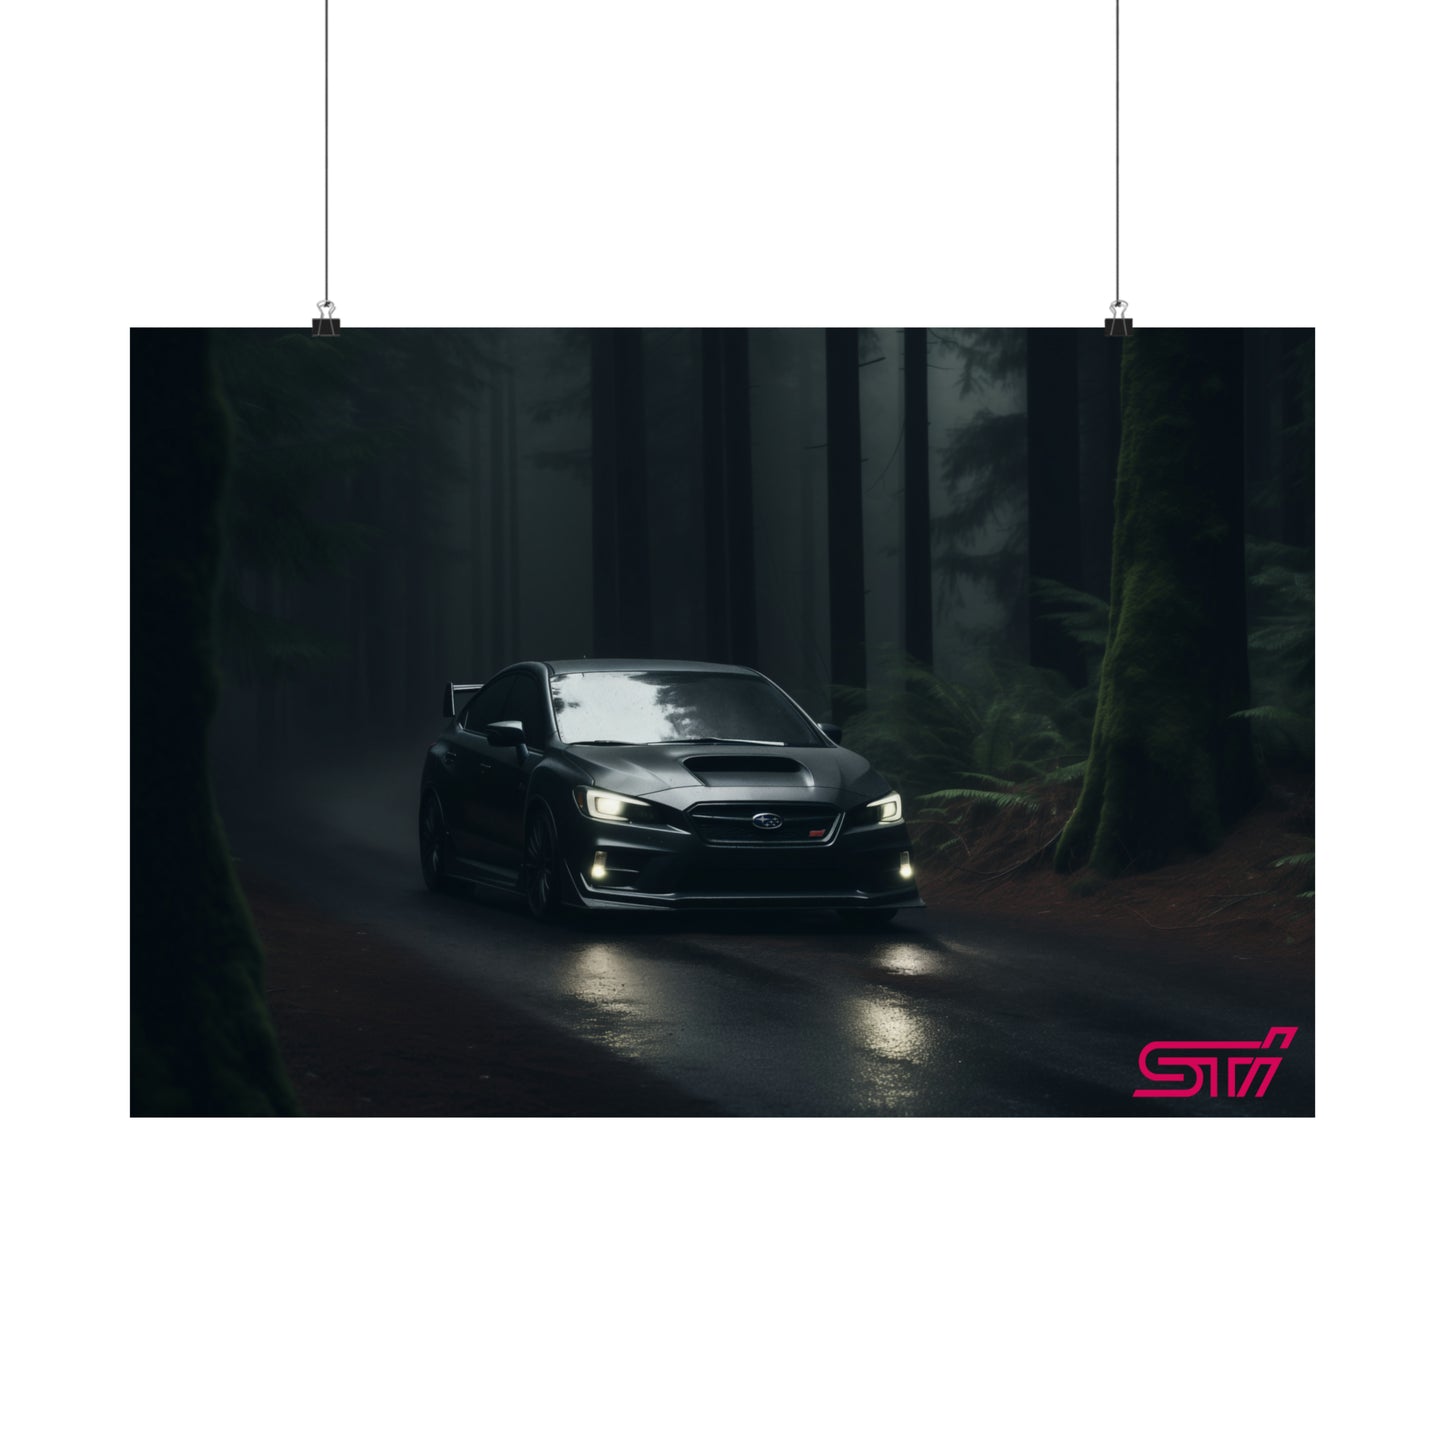 Subaru WRX STI Forest Drive Poster